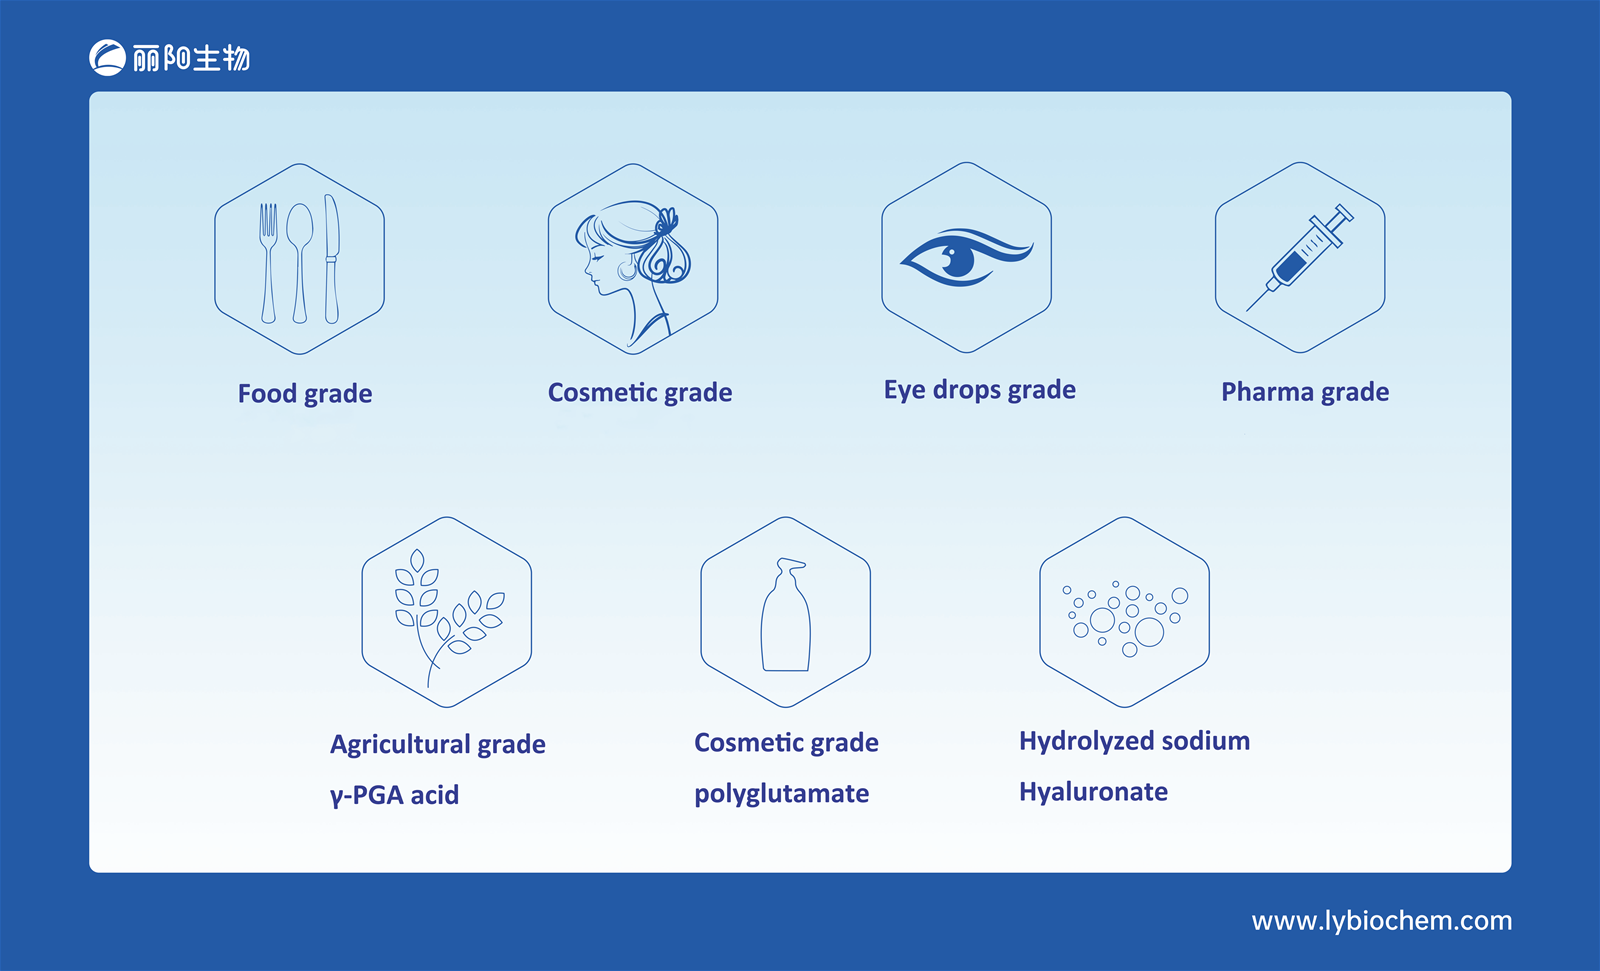 Hyaluronic acid powder for eye drops